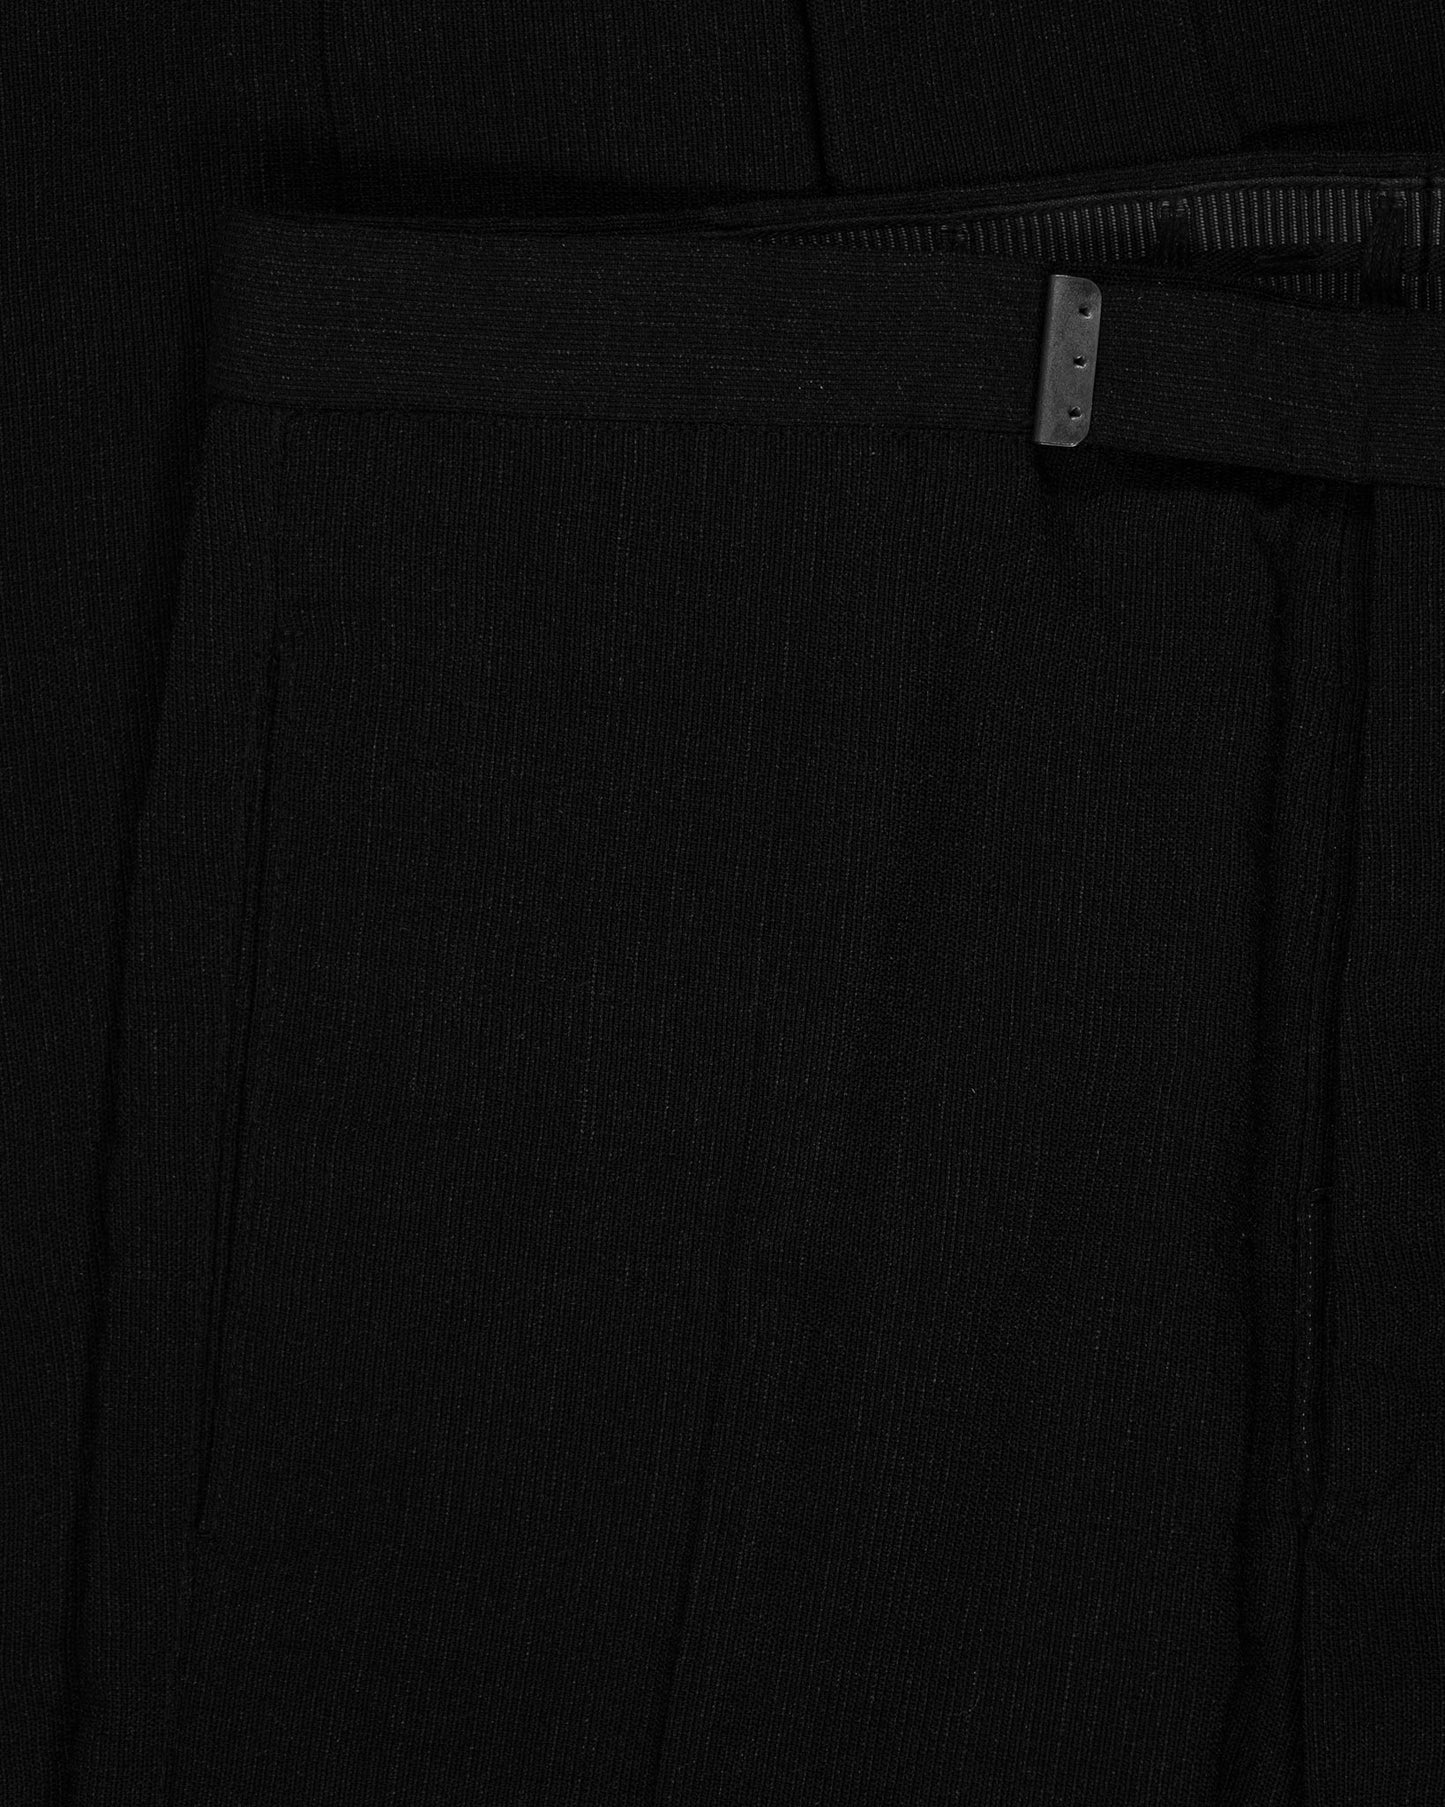 Carol Christian Poell Breadstick Trousers - 2009 "Self-Same" (PM/2414 NICHT/11)